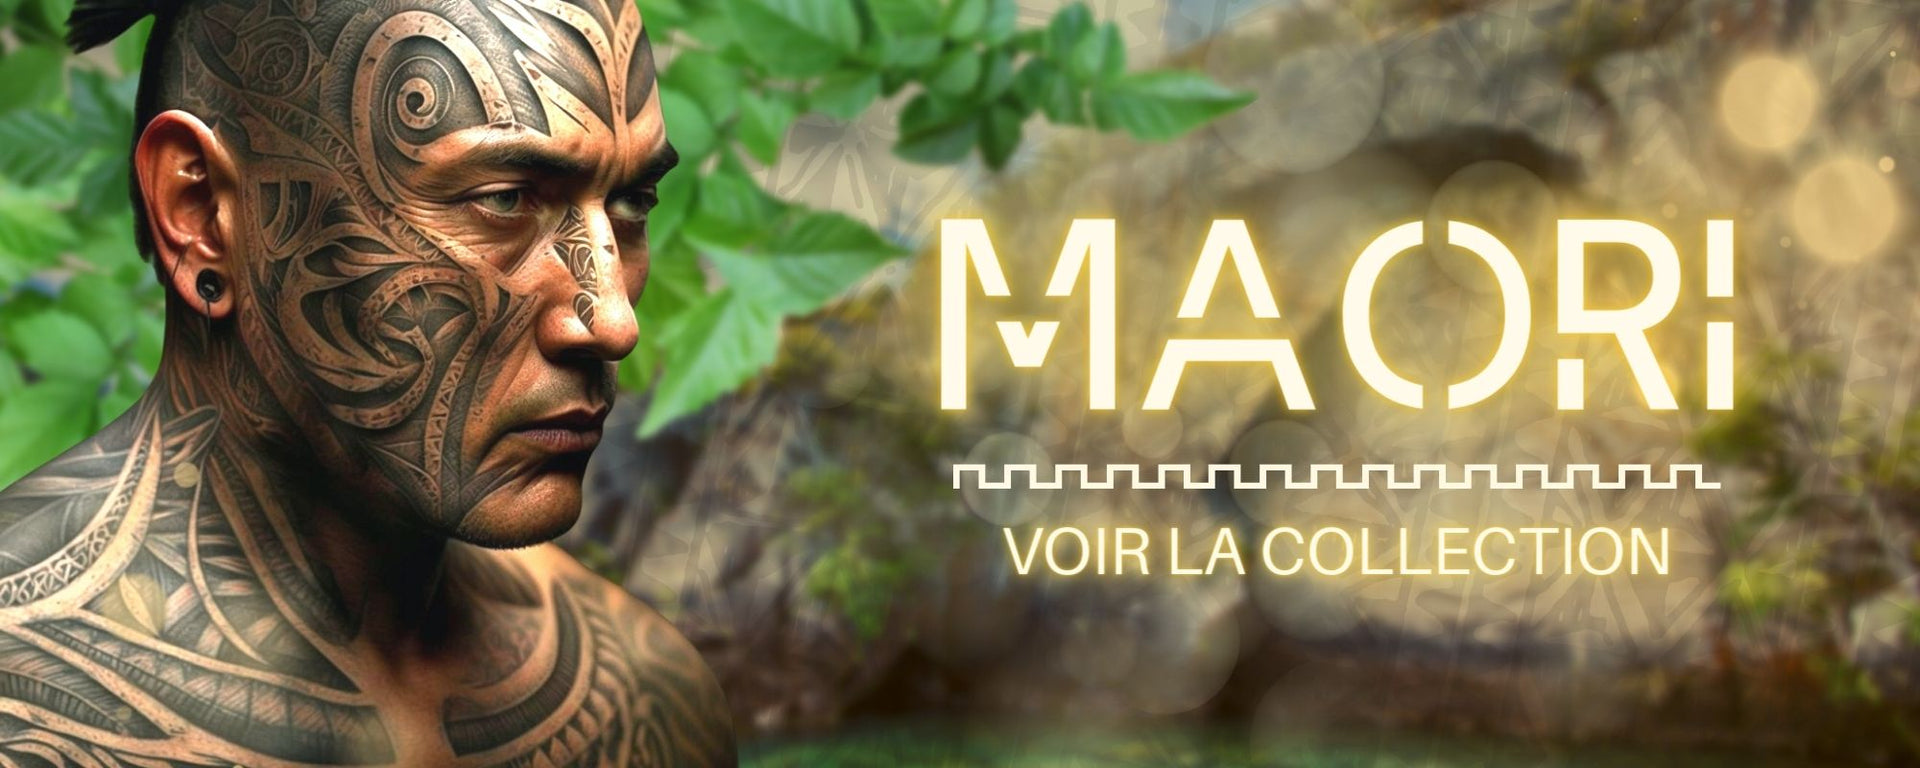 Maori / tribal